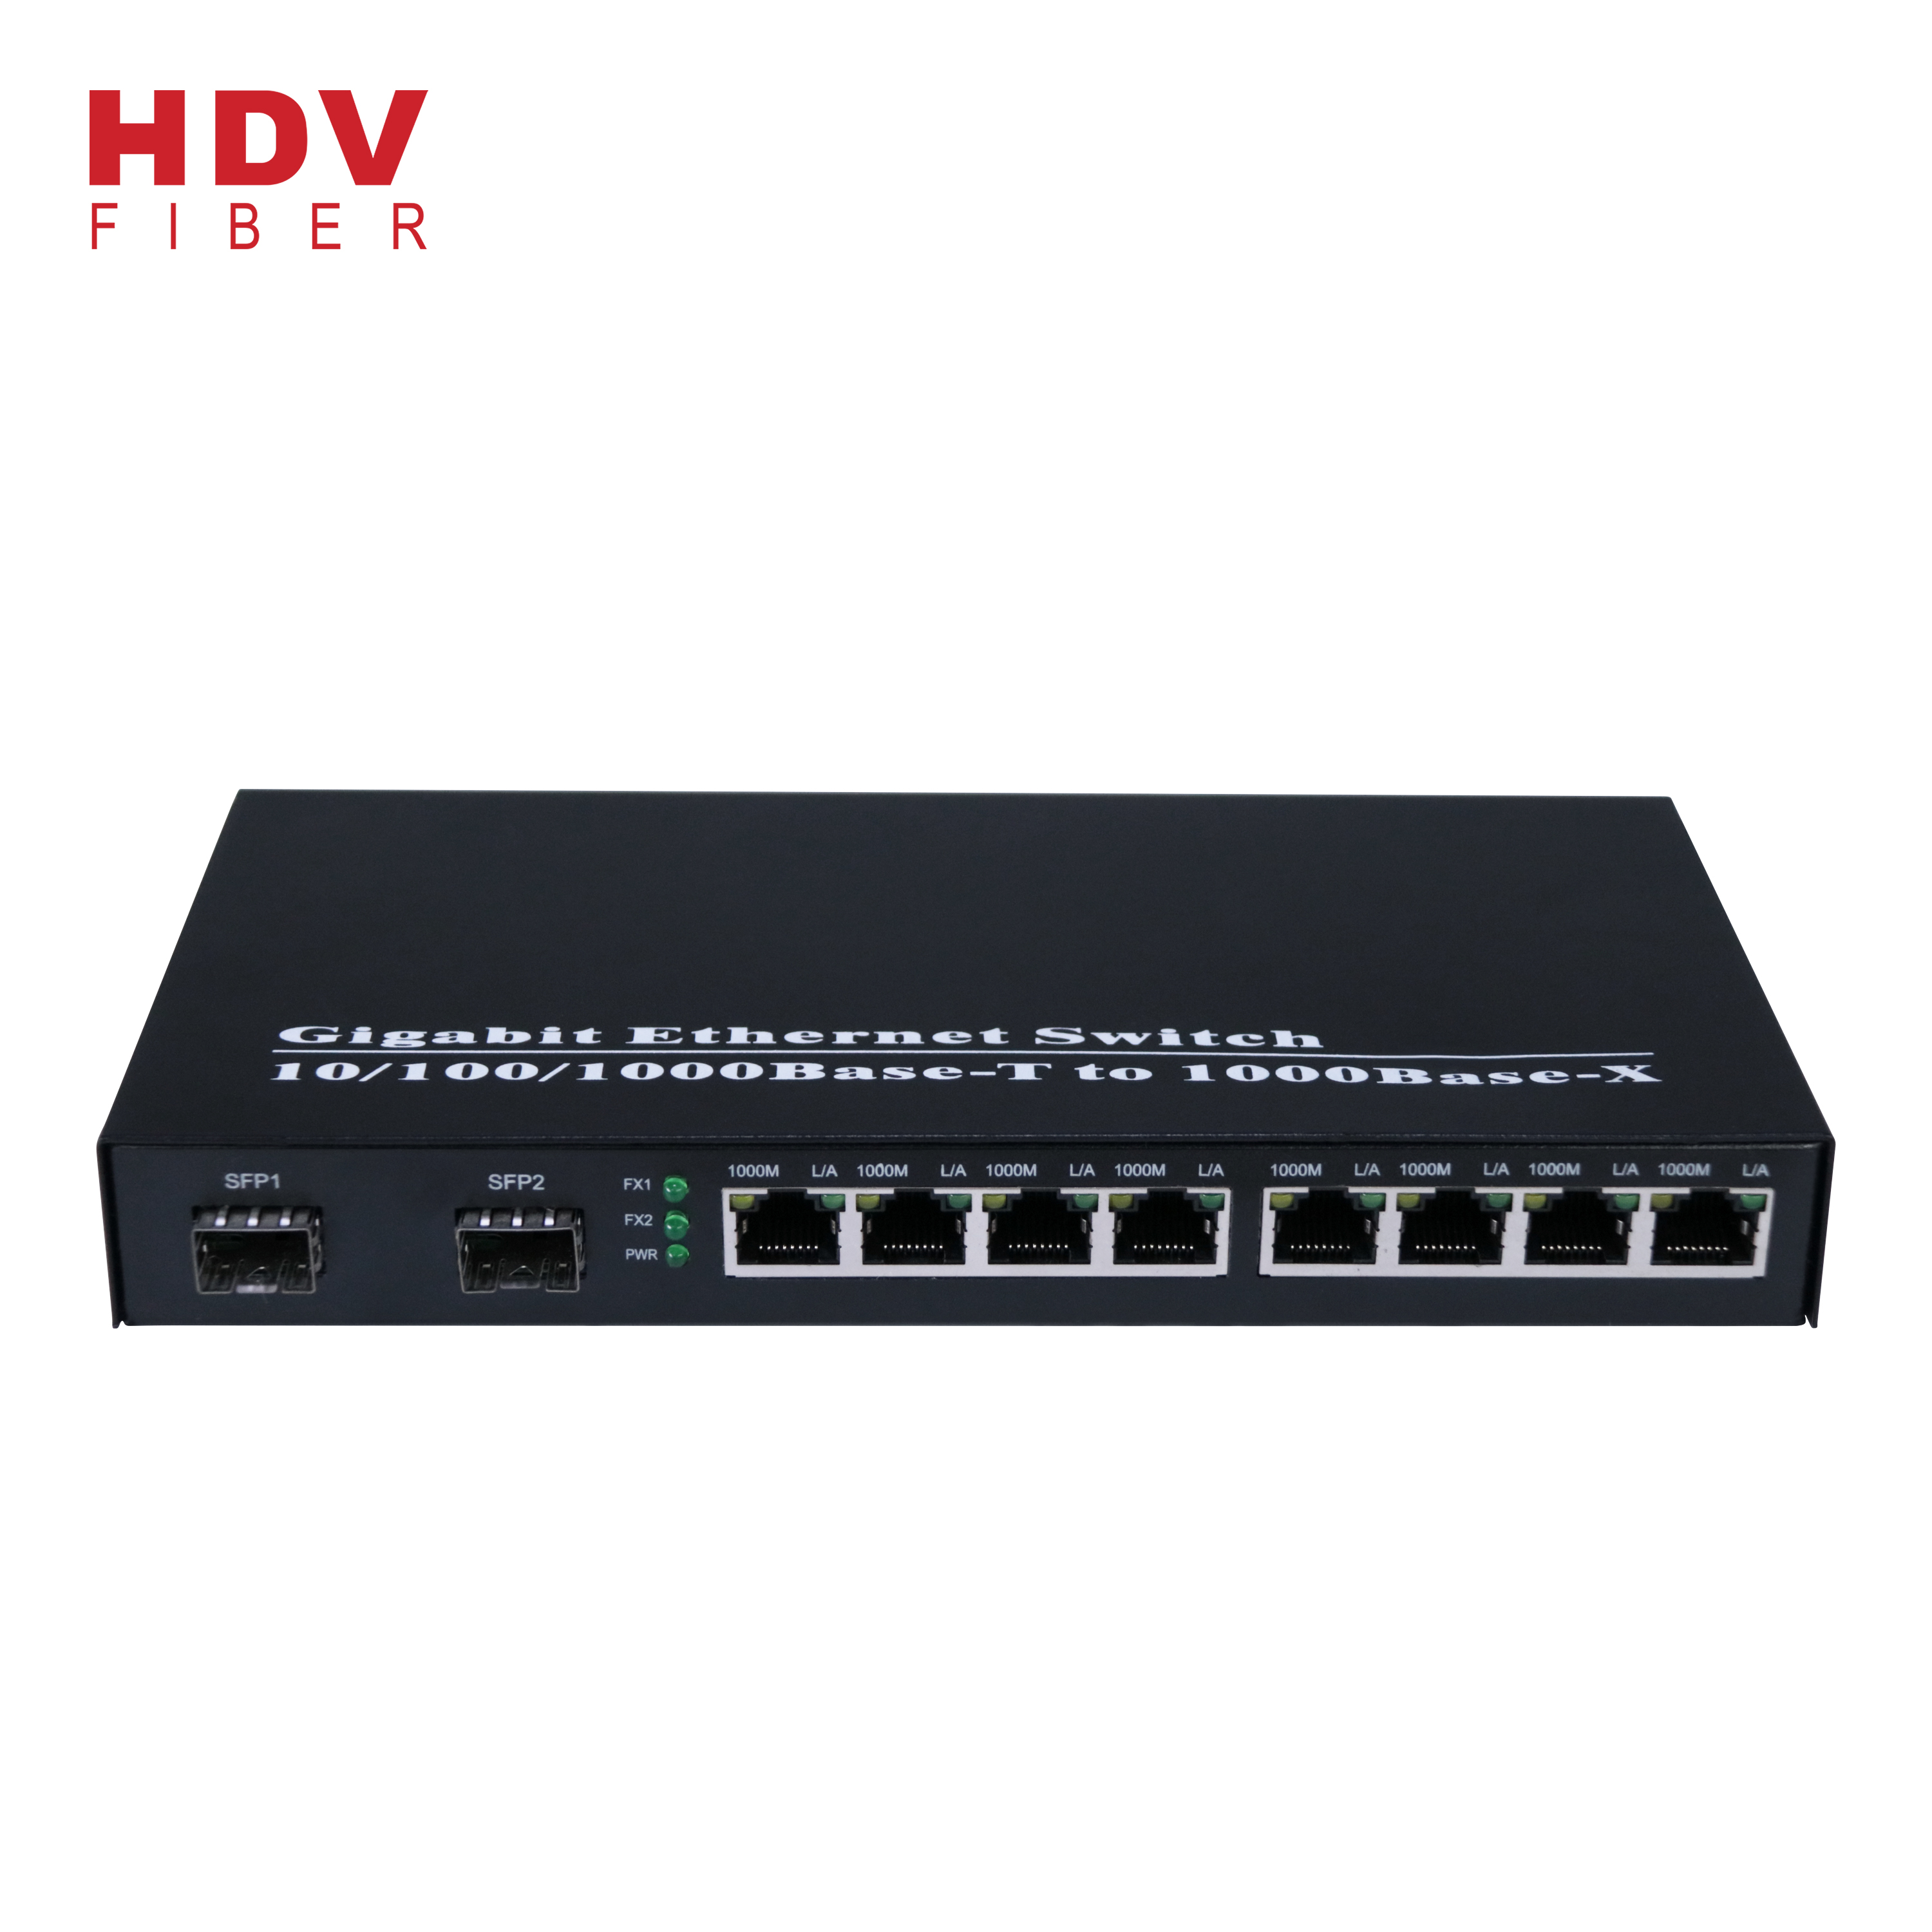 Managed Gigabit Switch - China Supplier 2 SFP Port 8 Ethernet Ports Optic Fiber Switch 10/100/1000M Media Converter – HDV